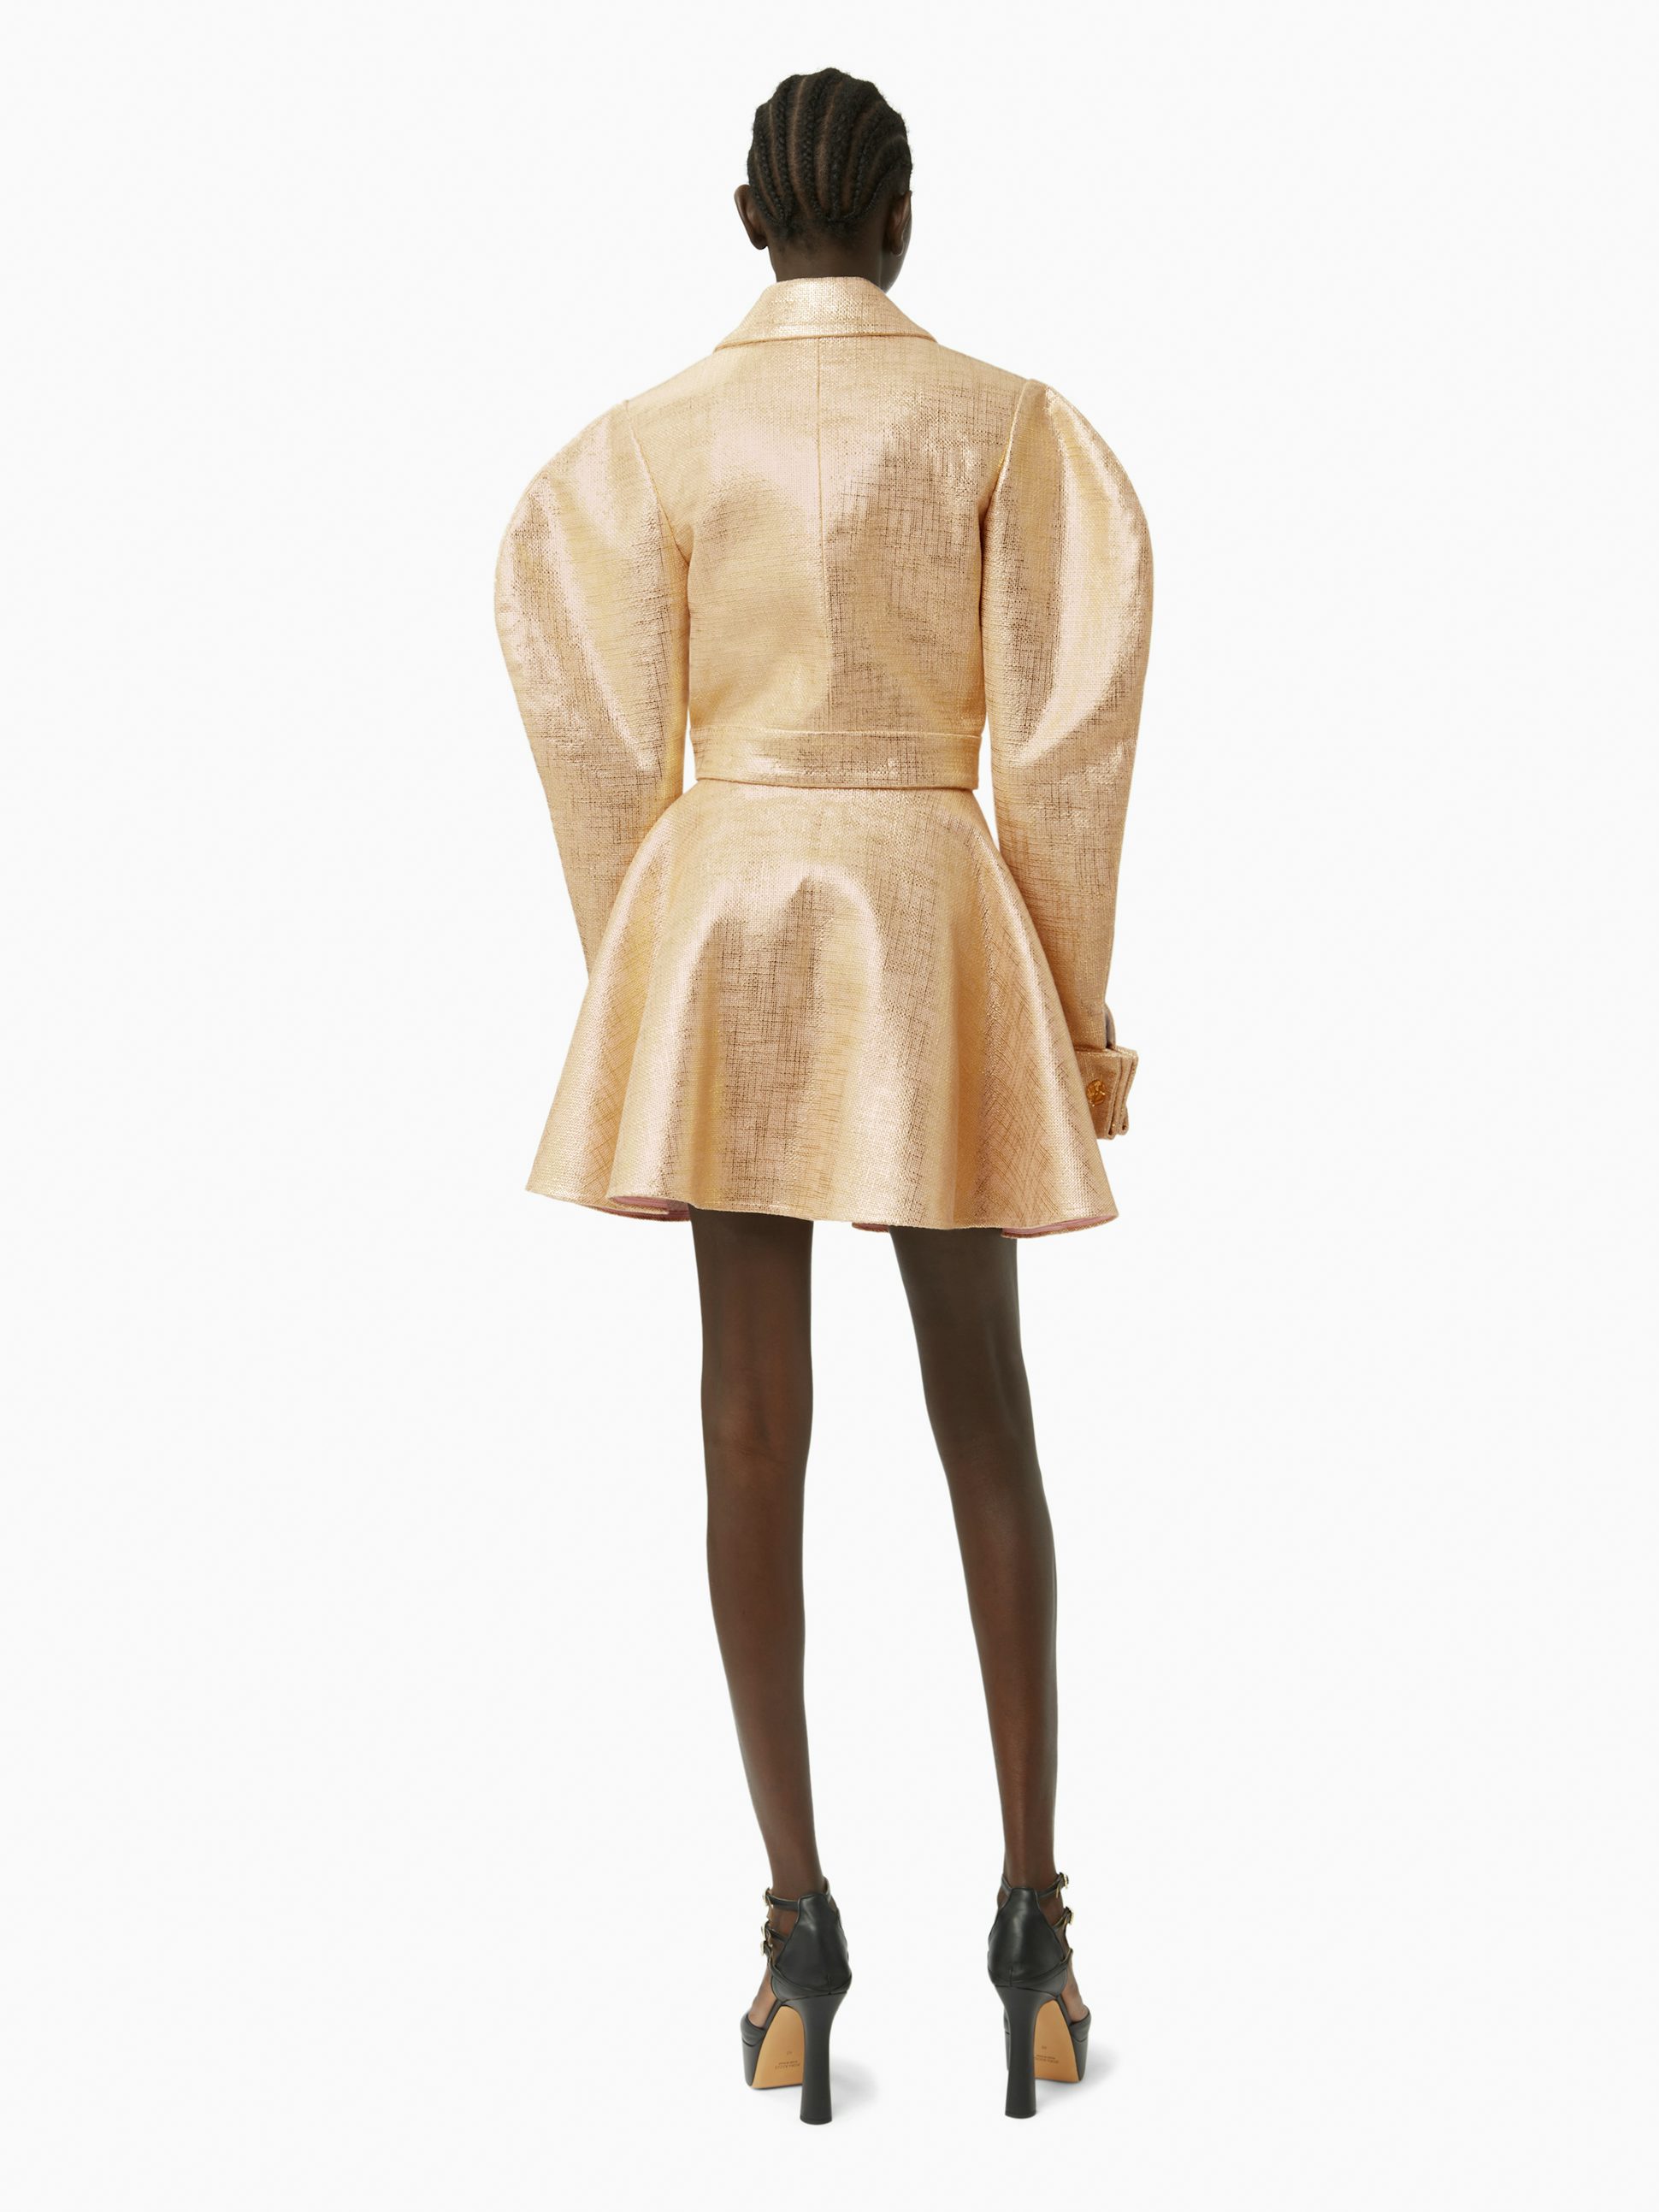 Mini flared skirt with pockets in gold - Nina Ricci